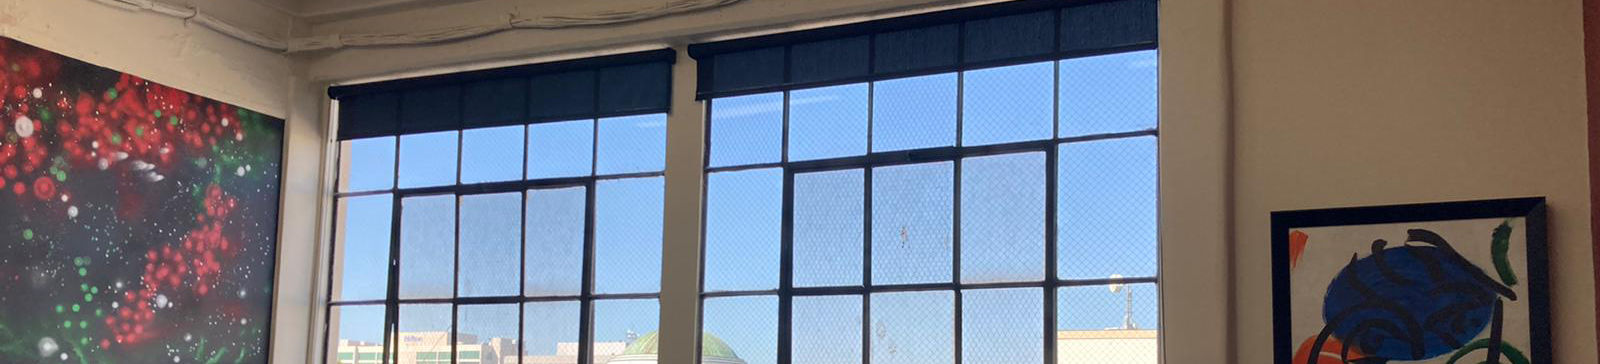 Custom Sheer Window Treatments in Thousand Oaks